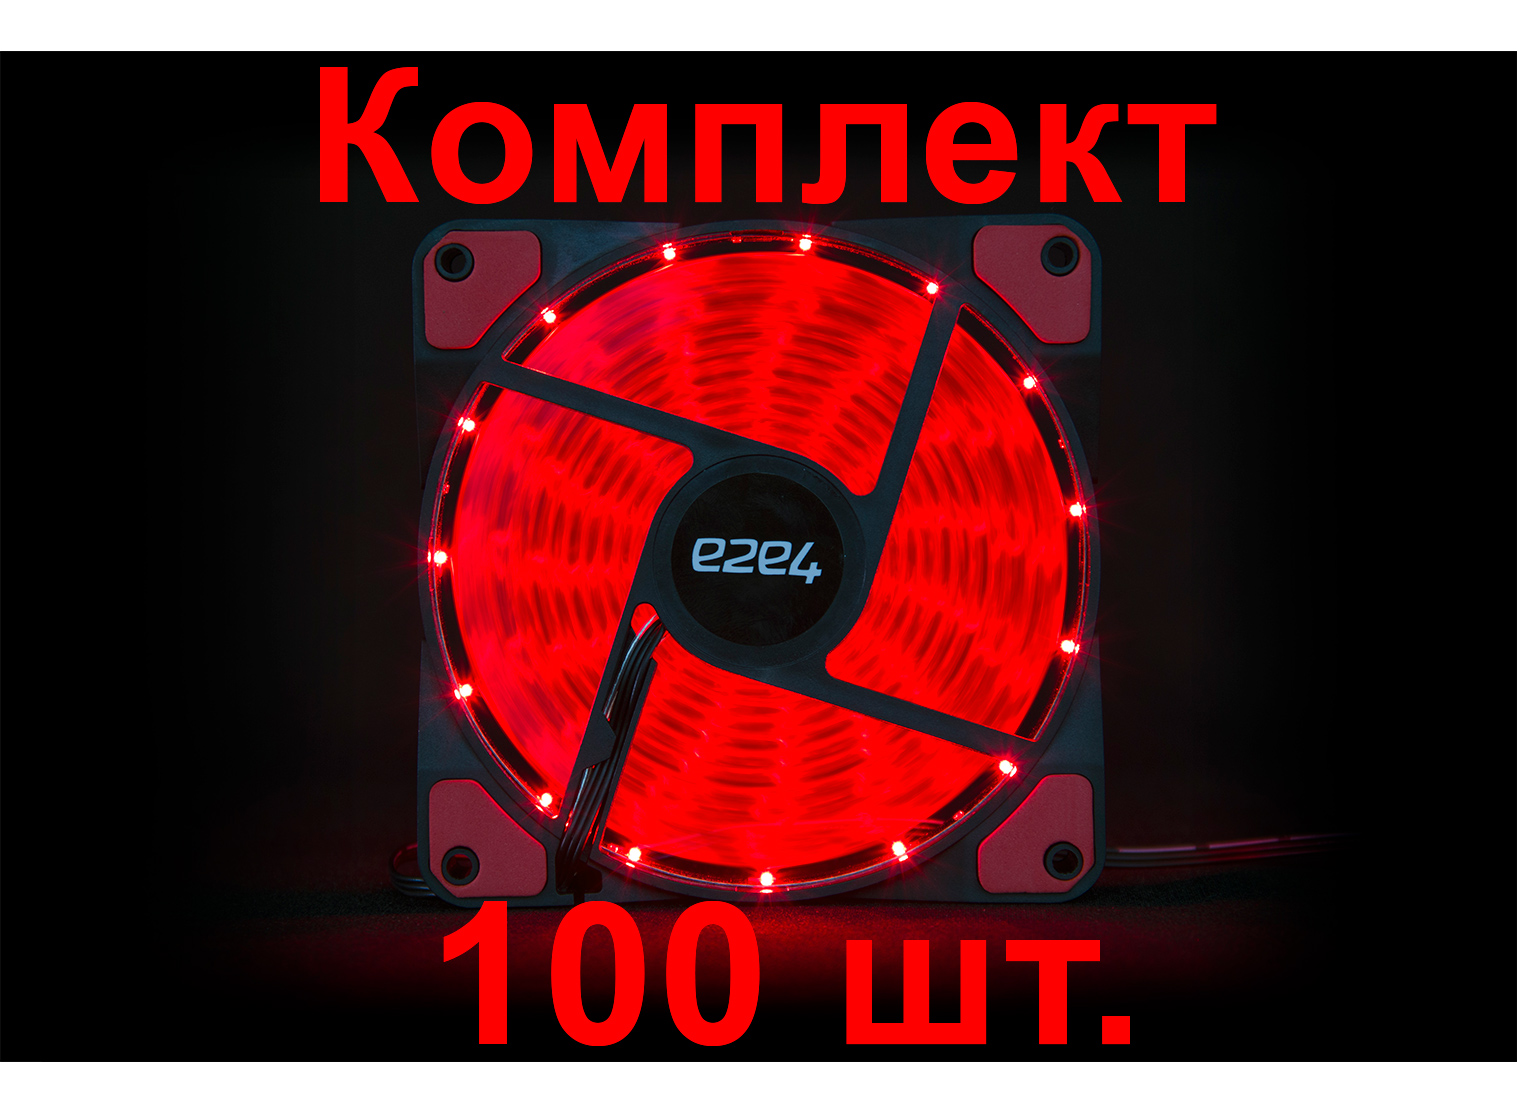 Комплект вентиляторов e2e4, 120мм, 1200rpm, 20 дБА, 3pin+Molex, 100шт, красный (OT-F120-3PM-LED-R-BNDL)